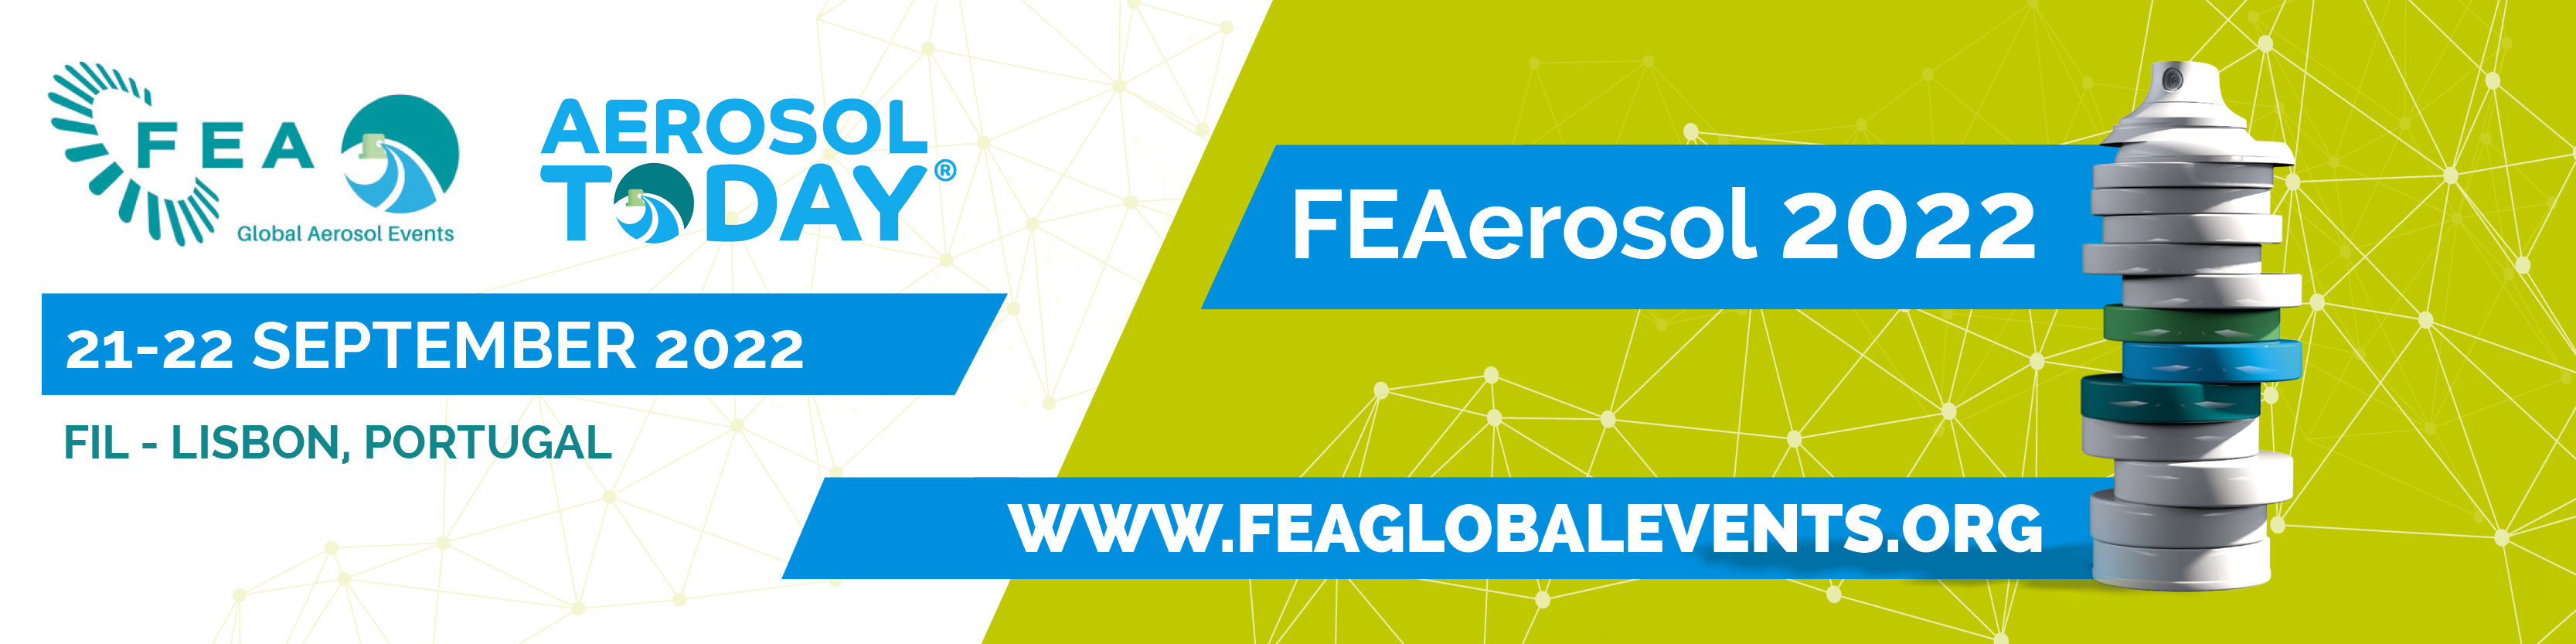 FEA Global Aerosol Event